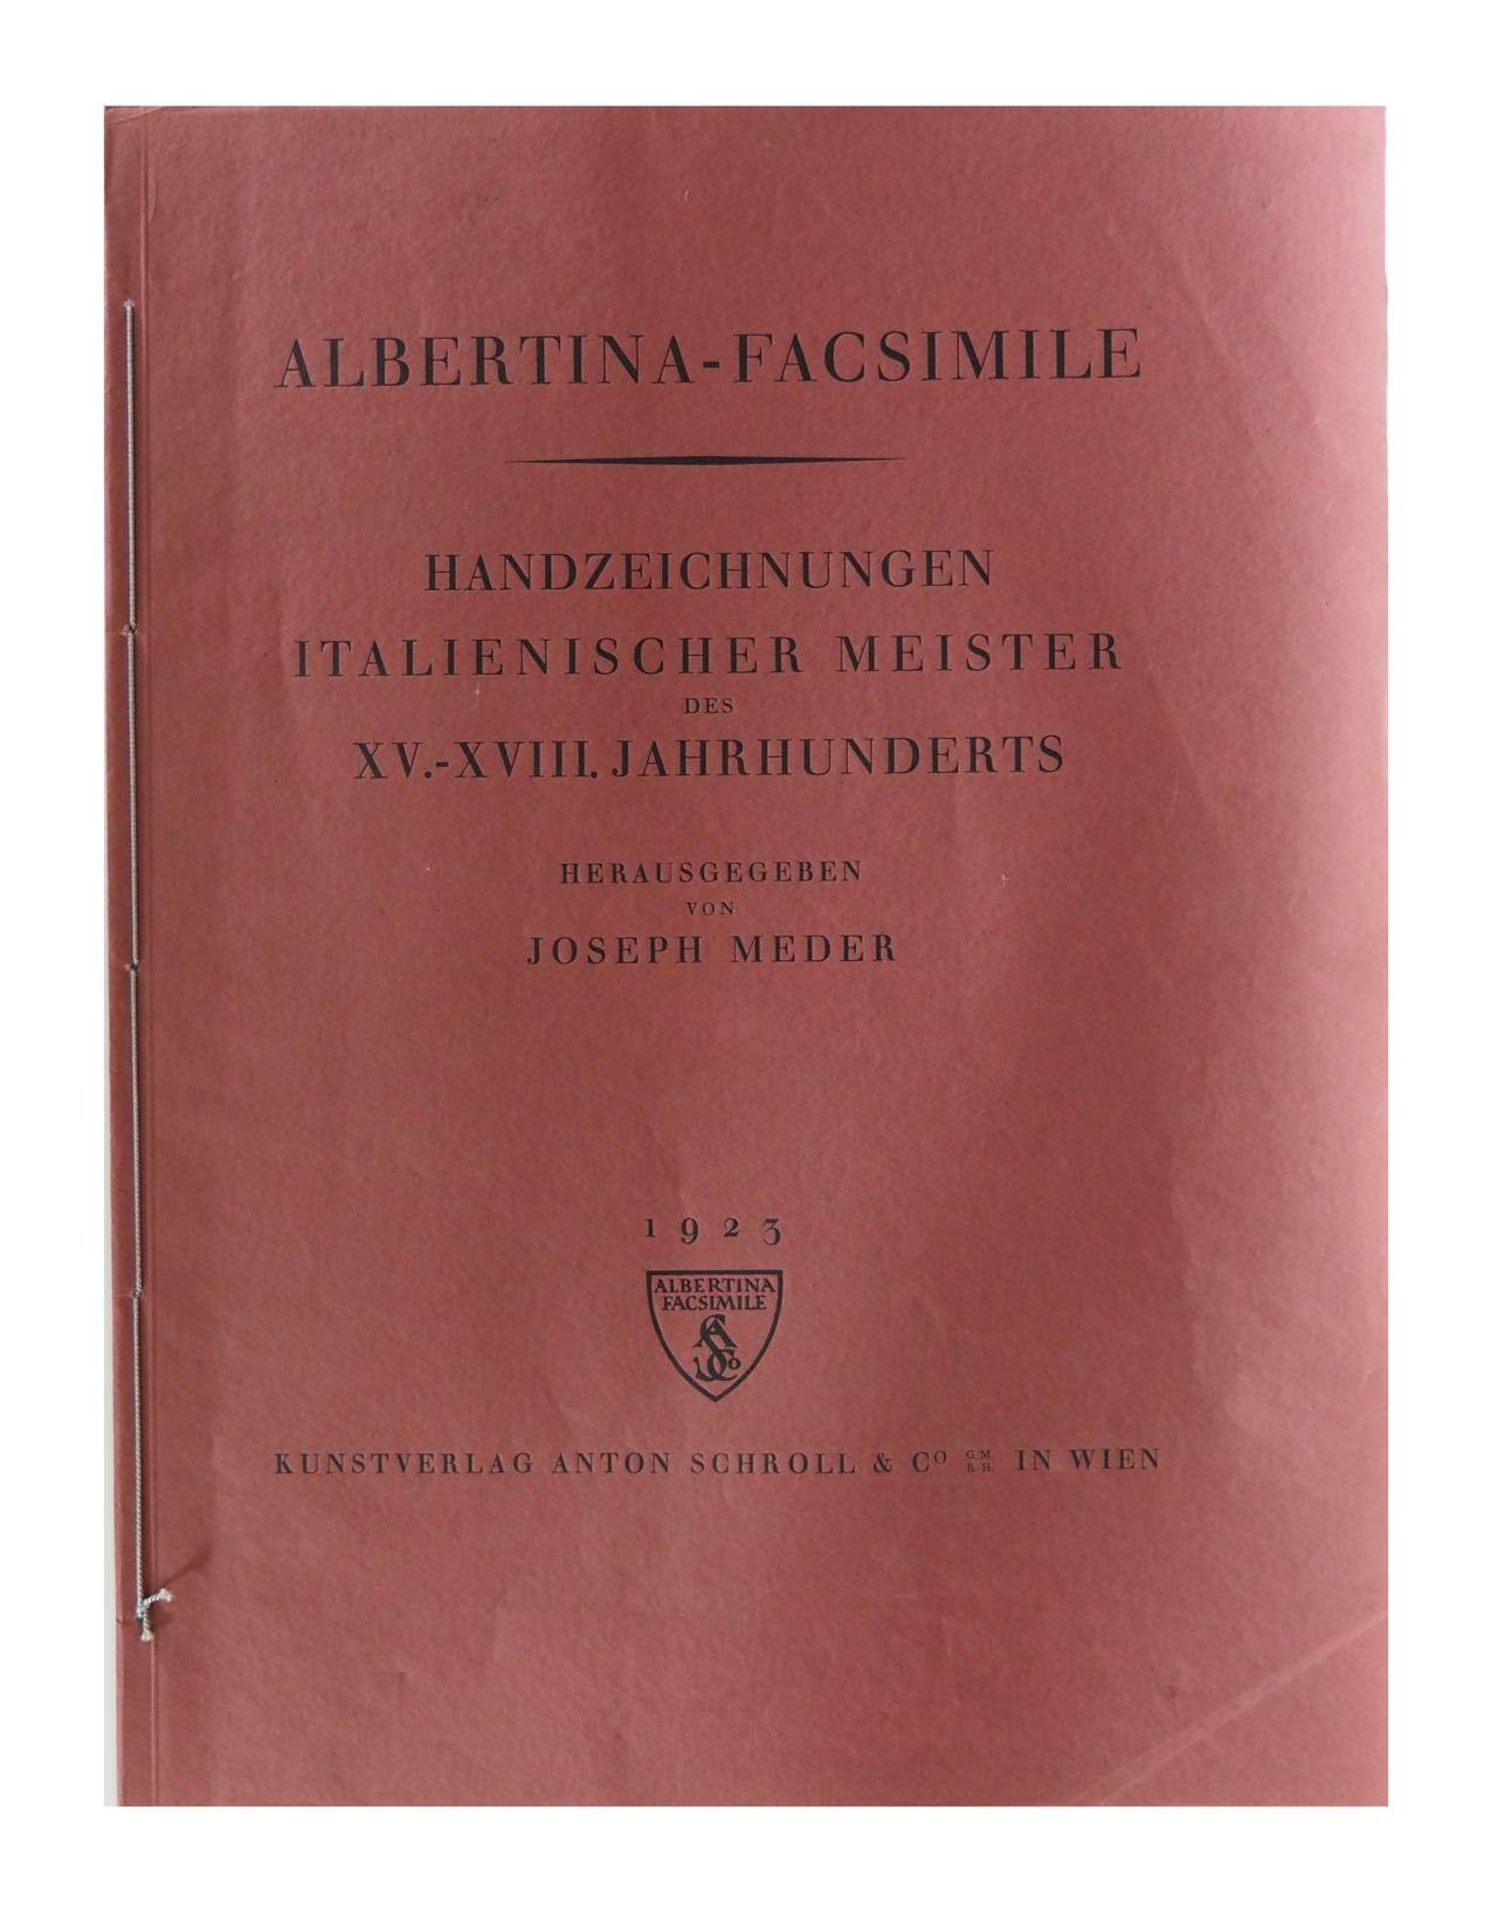 ALBERTINA-Facsimile-Drucke. Mappenwerk mit Textheft - Image 2 of 13